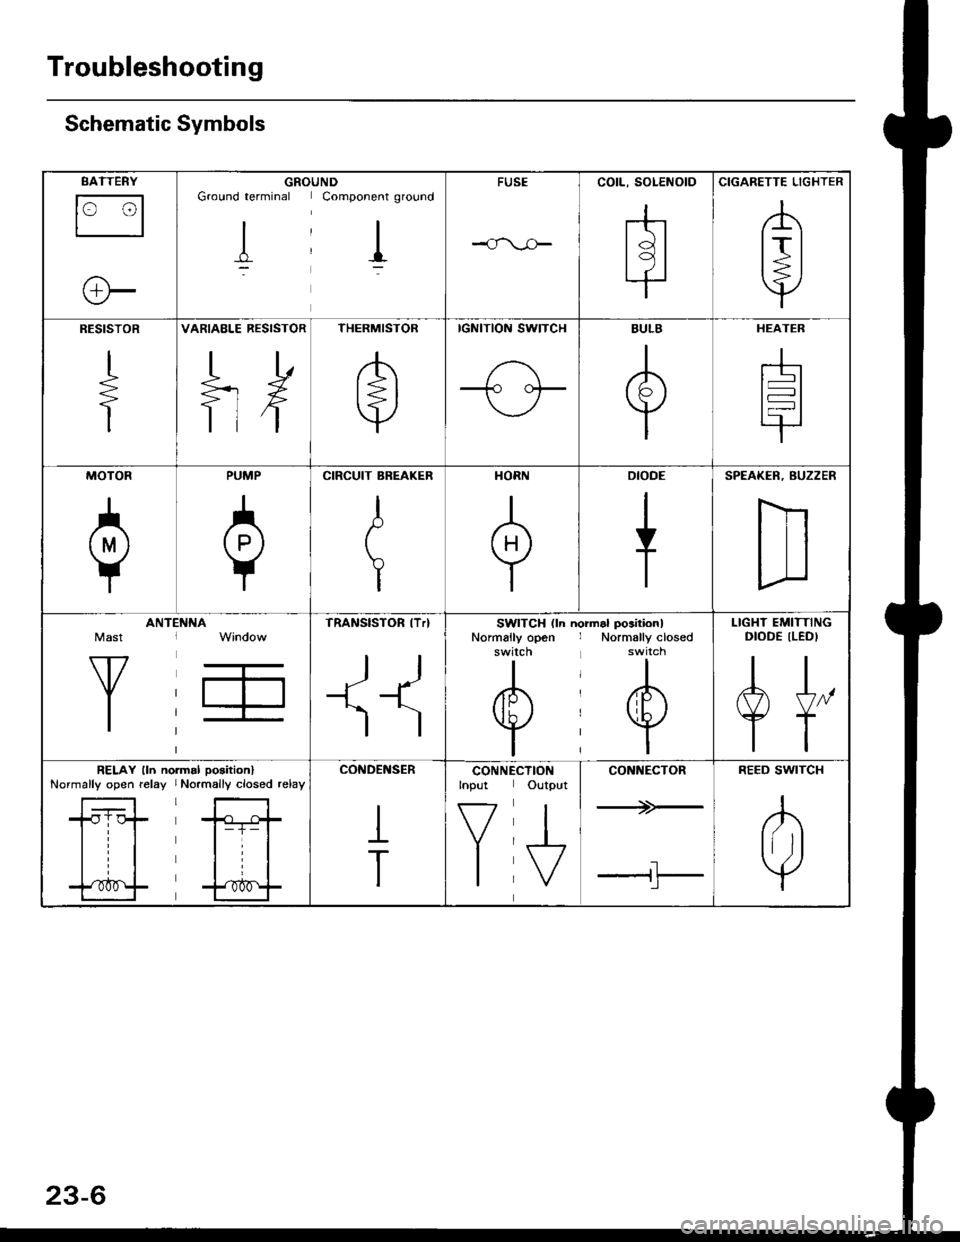 HONDA CIVIC 2000 6.G Workshop Manual Troubleshooting
Schematic Symbols
BATTERY
E
@
GROGroLrnd terminal
II_d:
UNDComponent ground
II_..-
FUSE
--cn-.e
COIL, SOLENOID
r{r
tql|
CIGARETTE LIGHTER
A
lrl
P
RESISTOR
I
f
VARIAELE RESISTOR
ilH
T